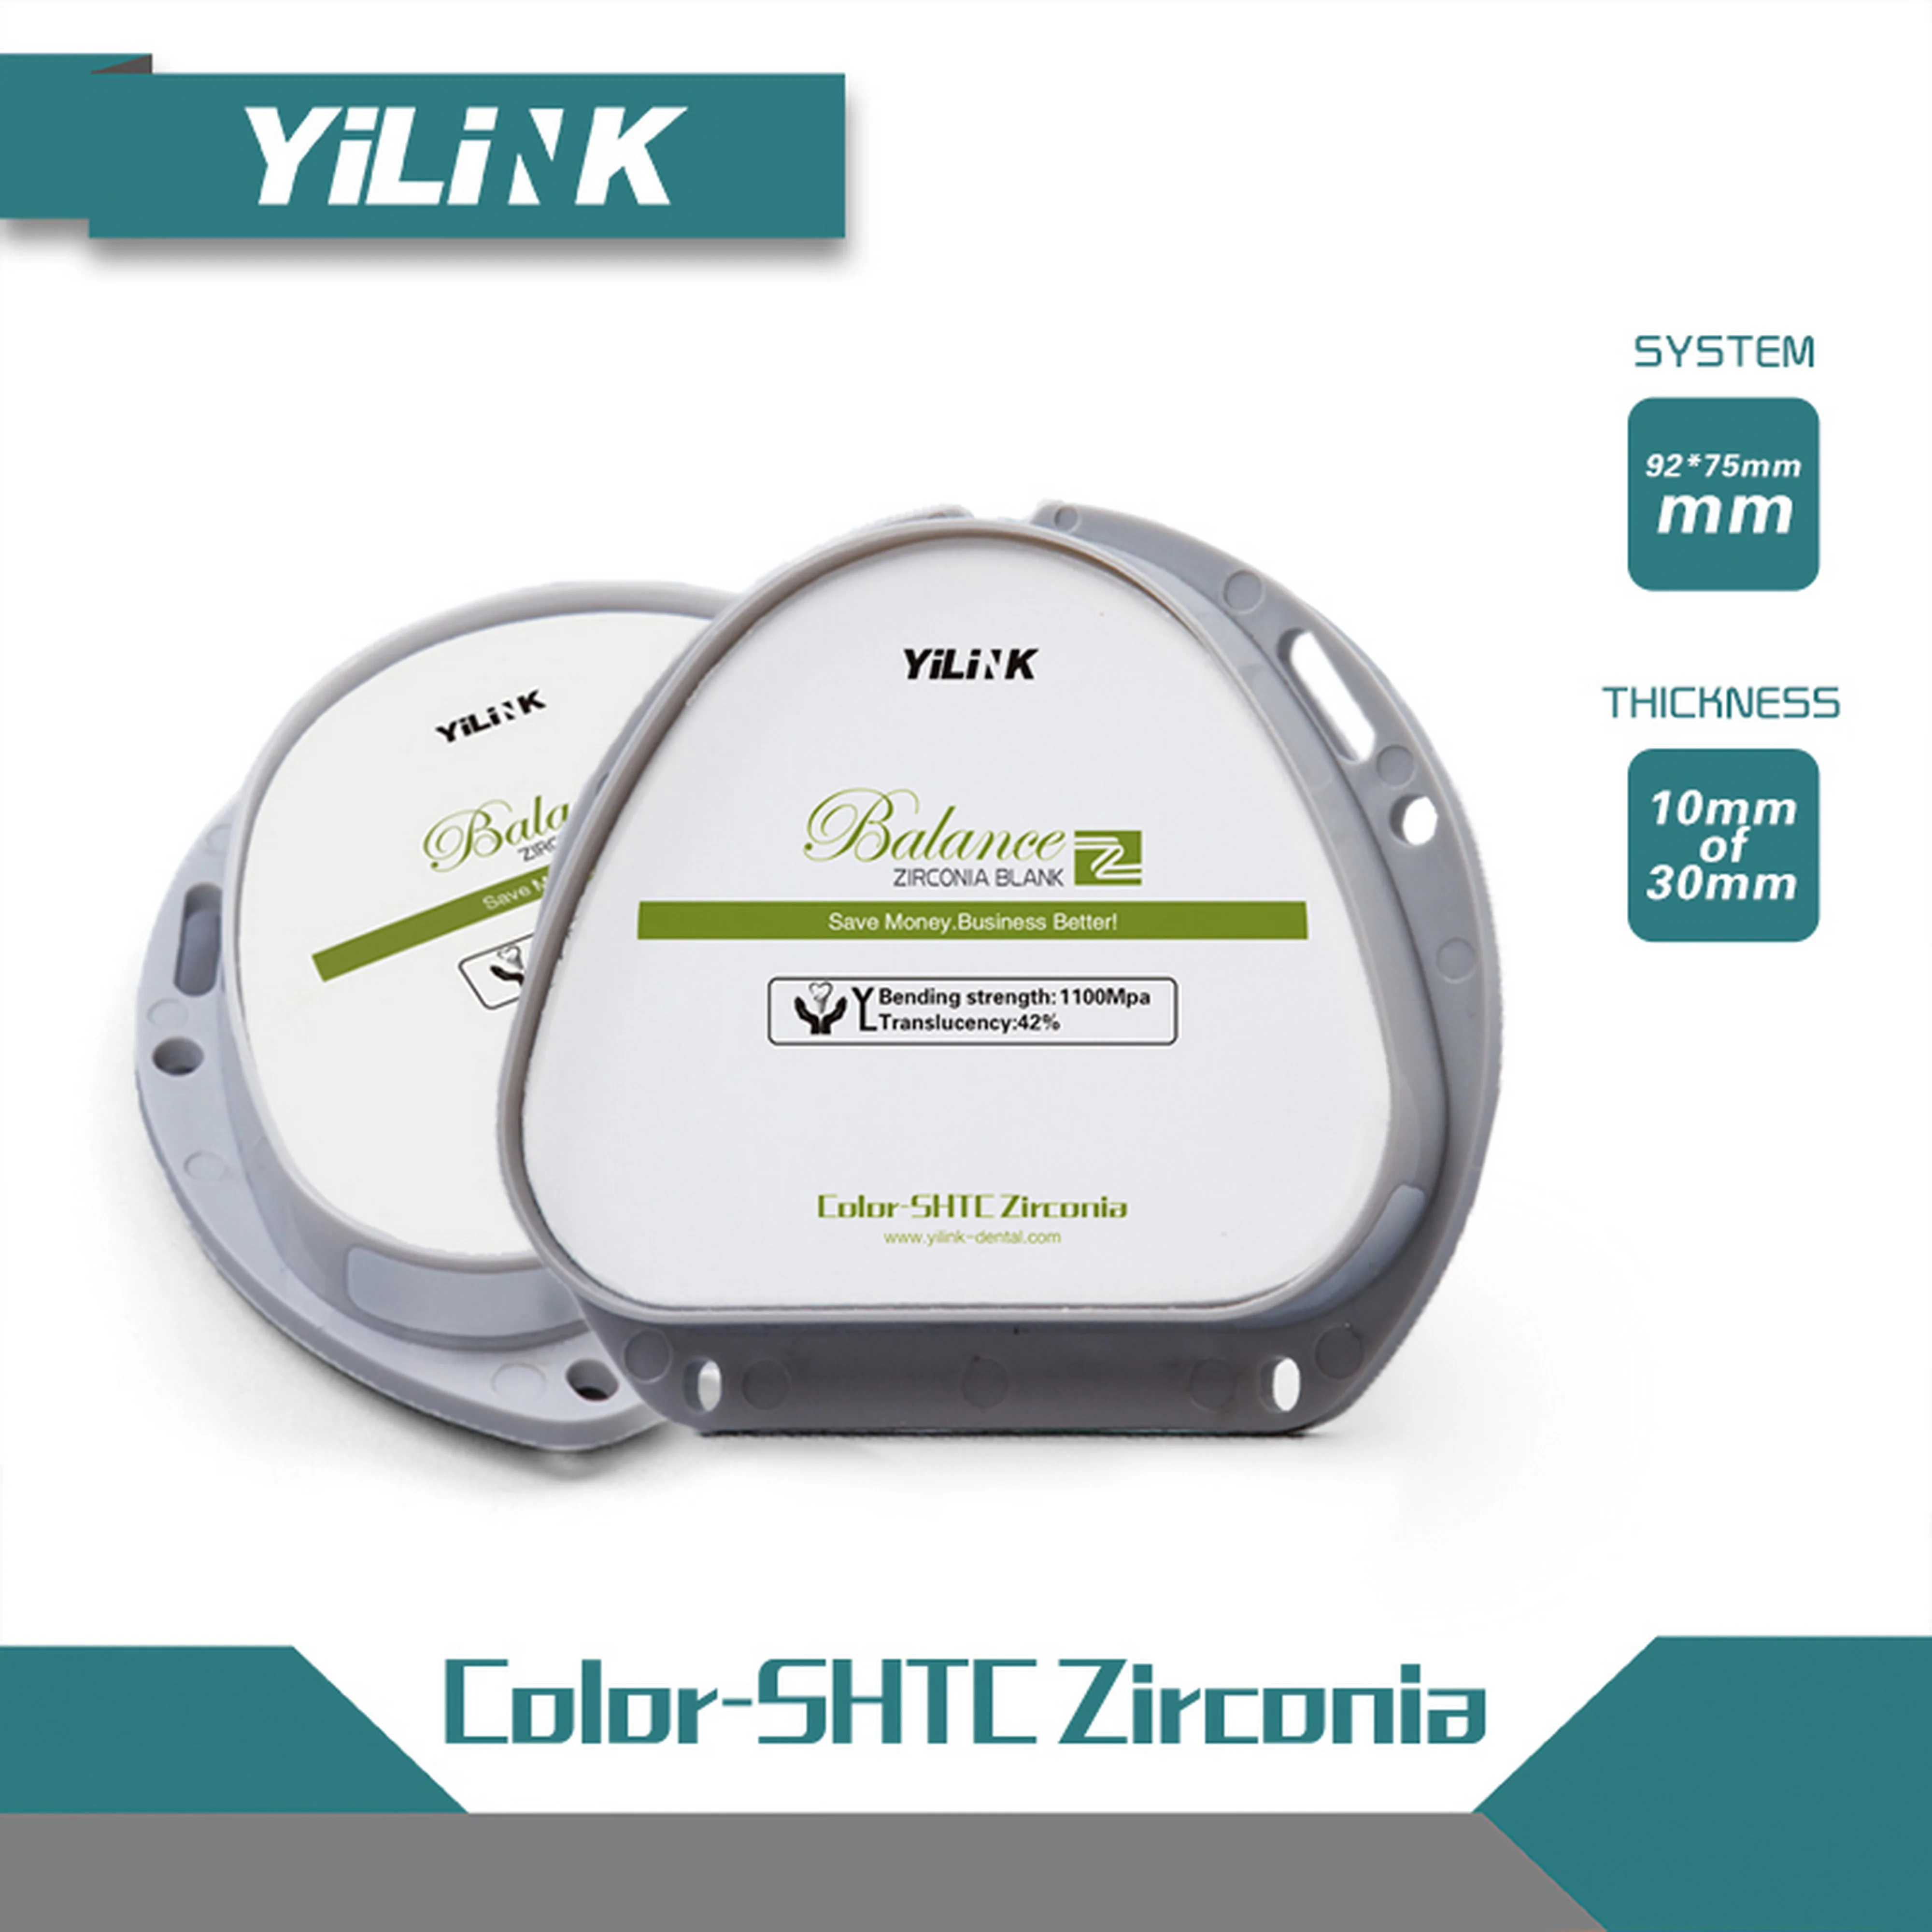 Yilink Dental SHTC Pre-Shaded Zirconia Block AG System 71mm Dental Supplies Restoration Materials for Dental Lab CAD/CAM